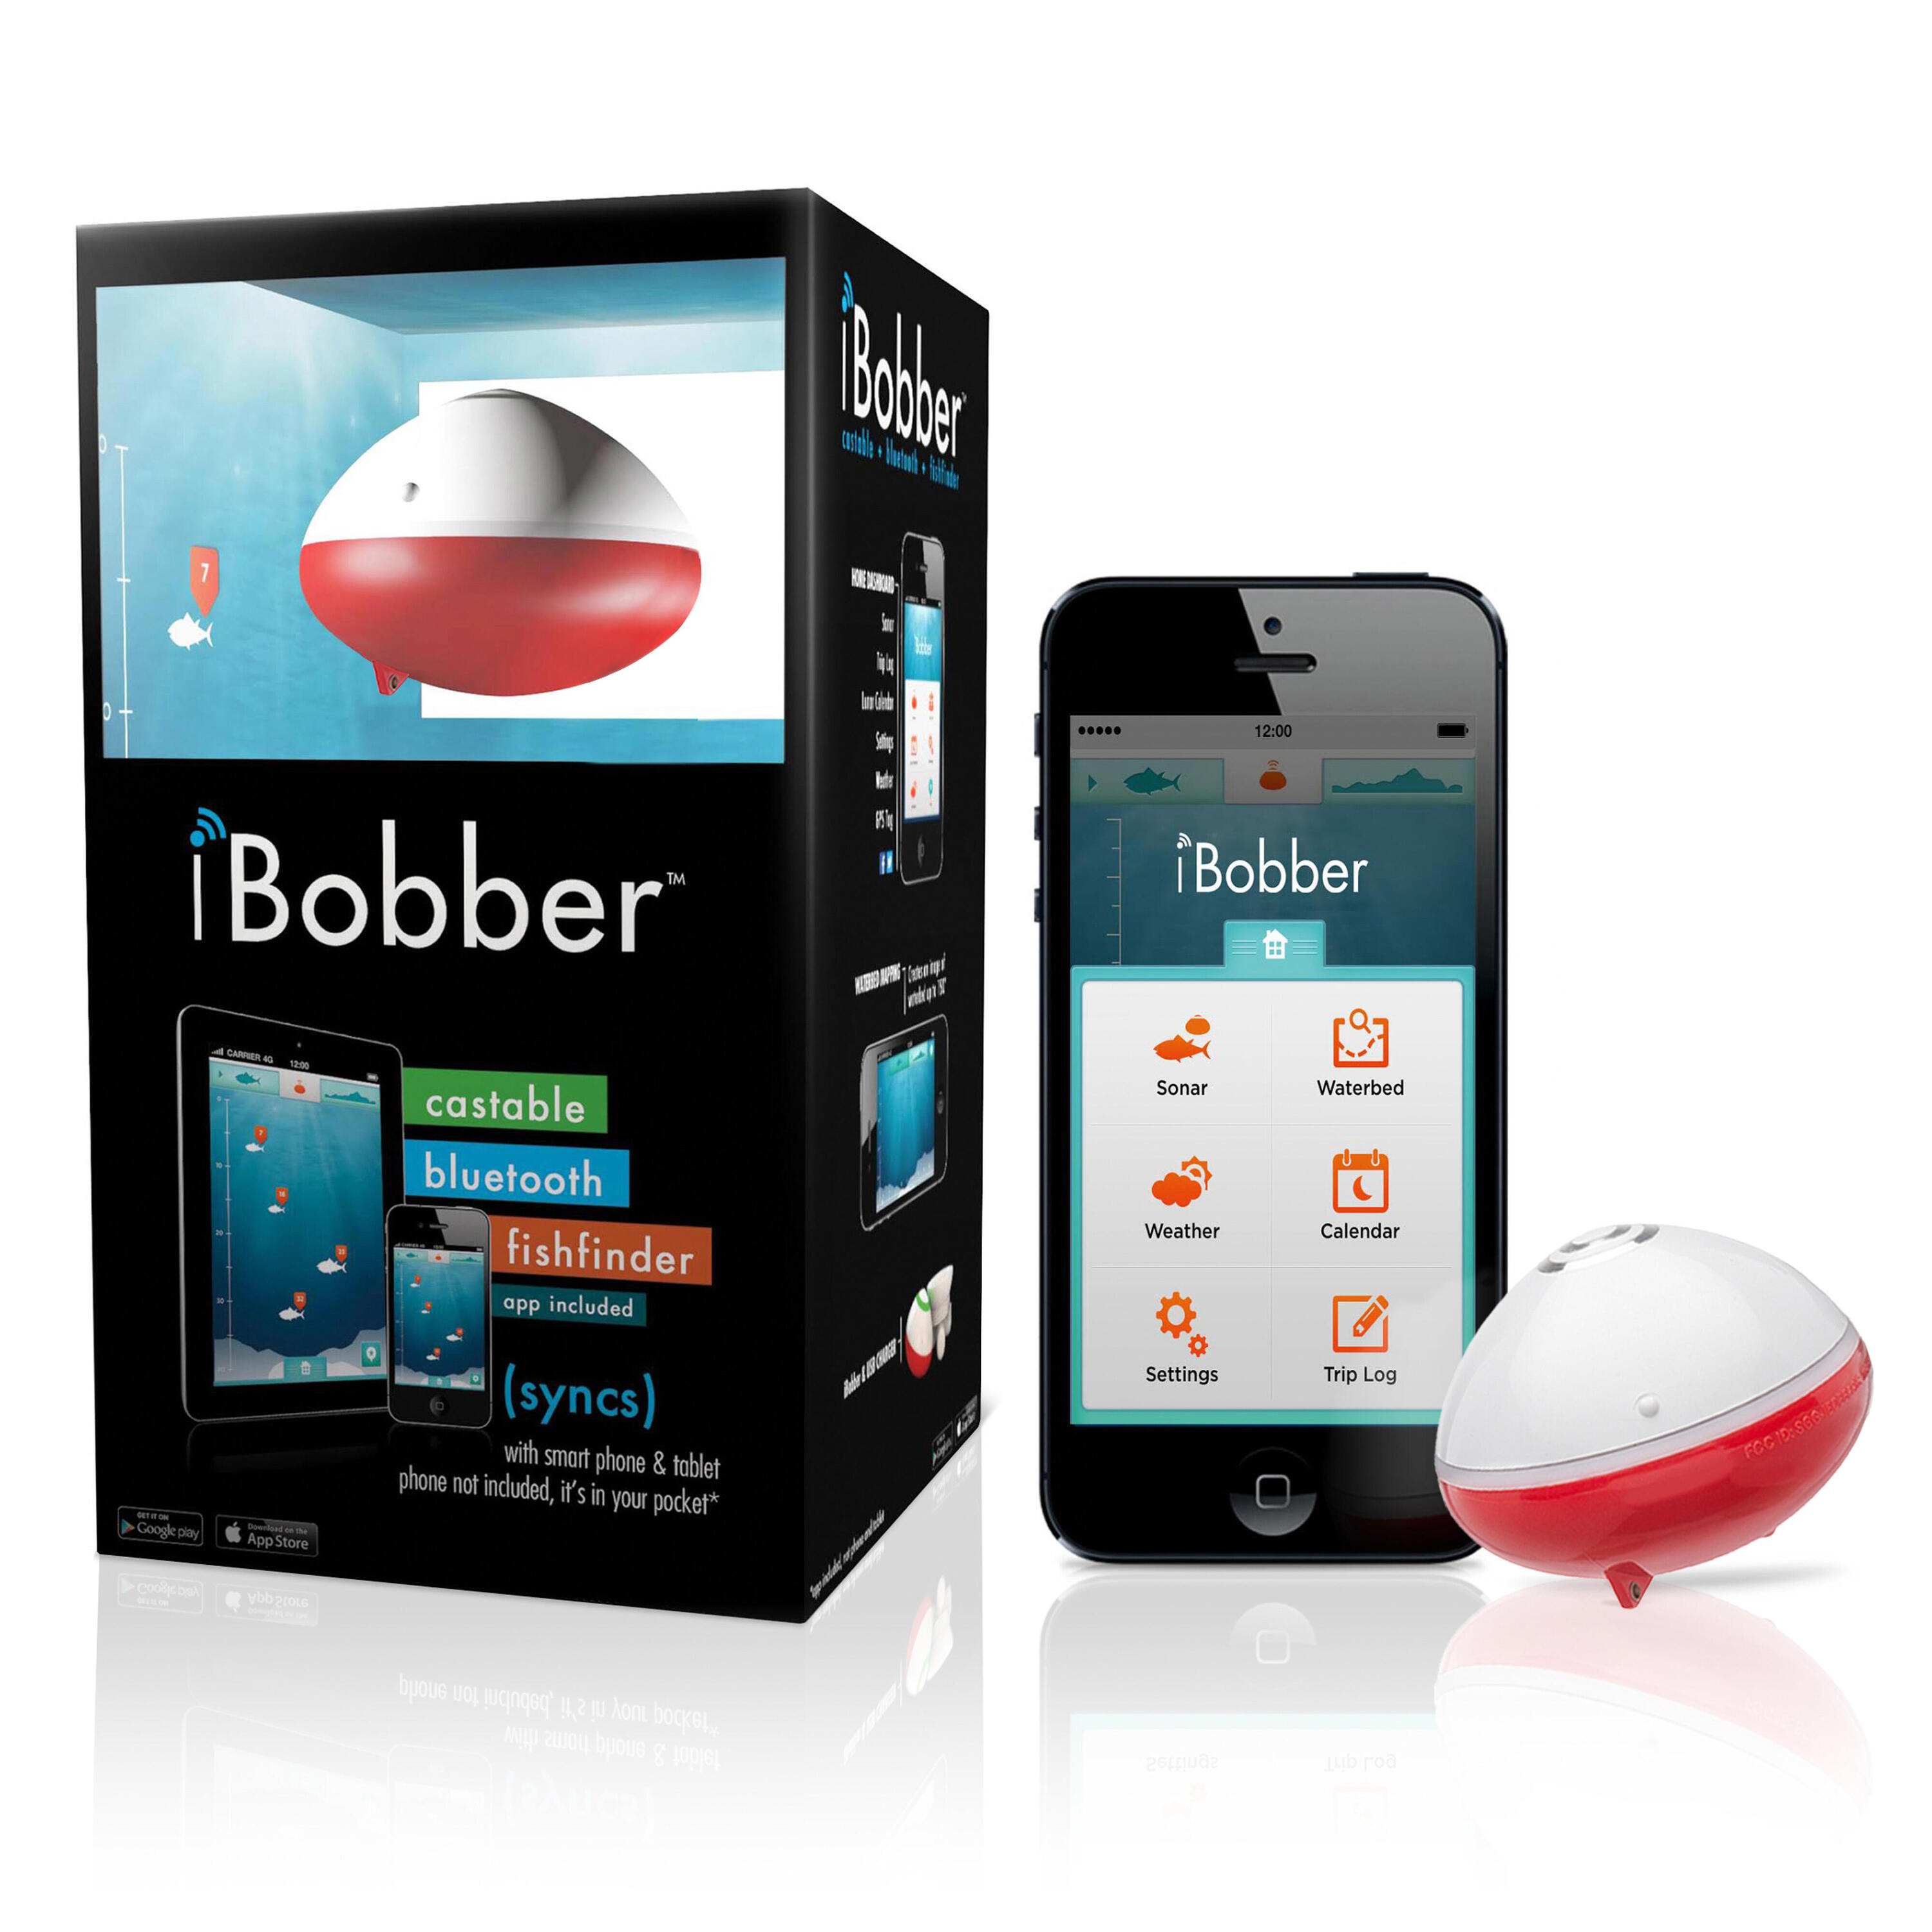 GOFISH iBobber Castable Bluetooth Smart Fish Finder - Carp and Night Fishing